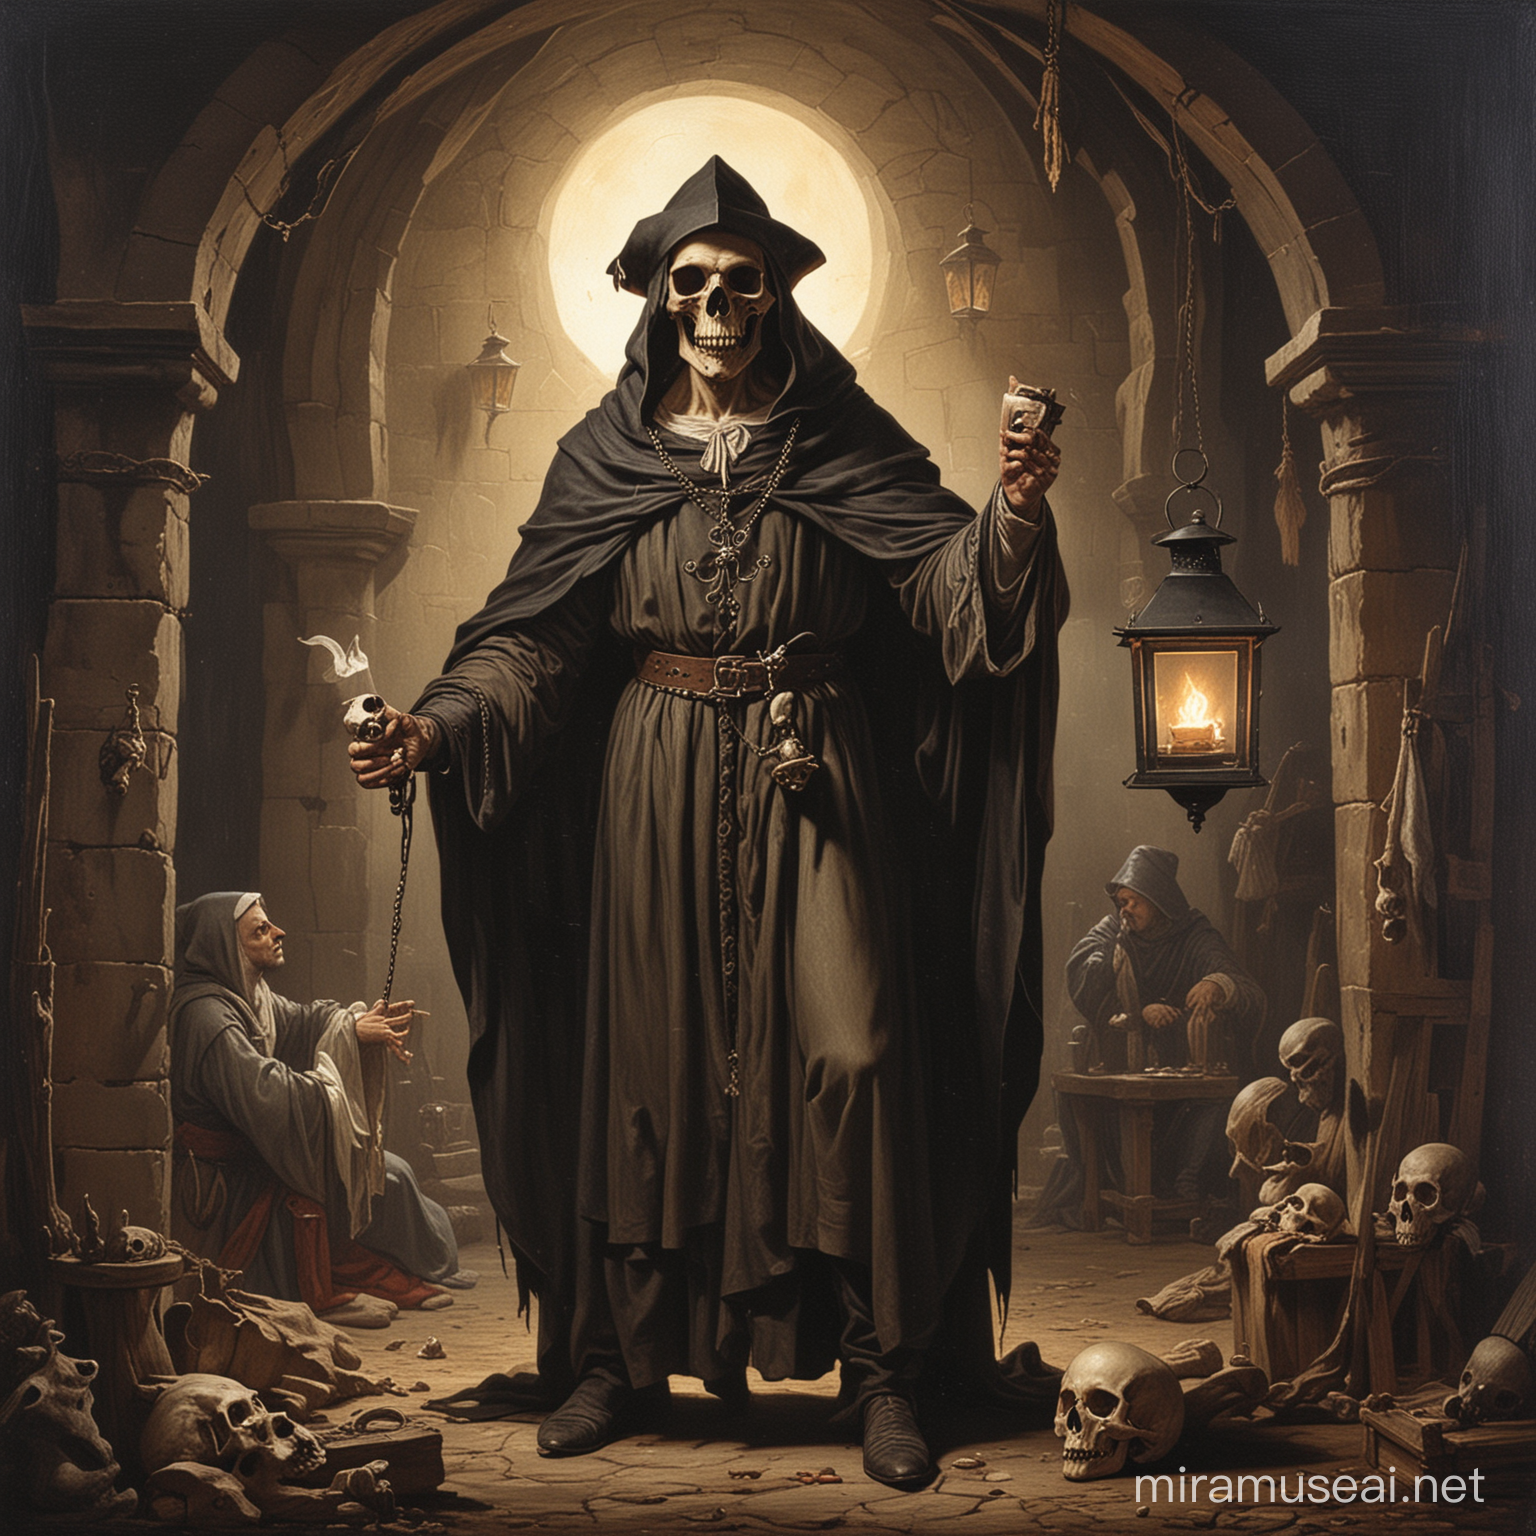 Medieval Faust Holding Skull by Lantern Light